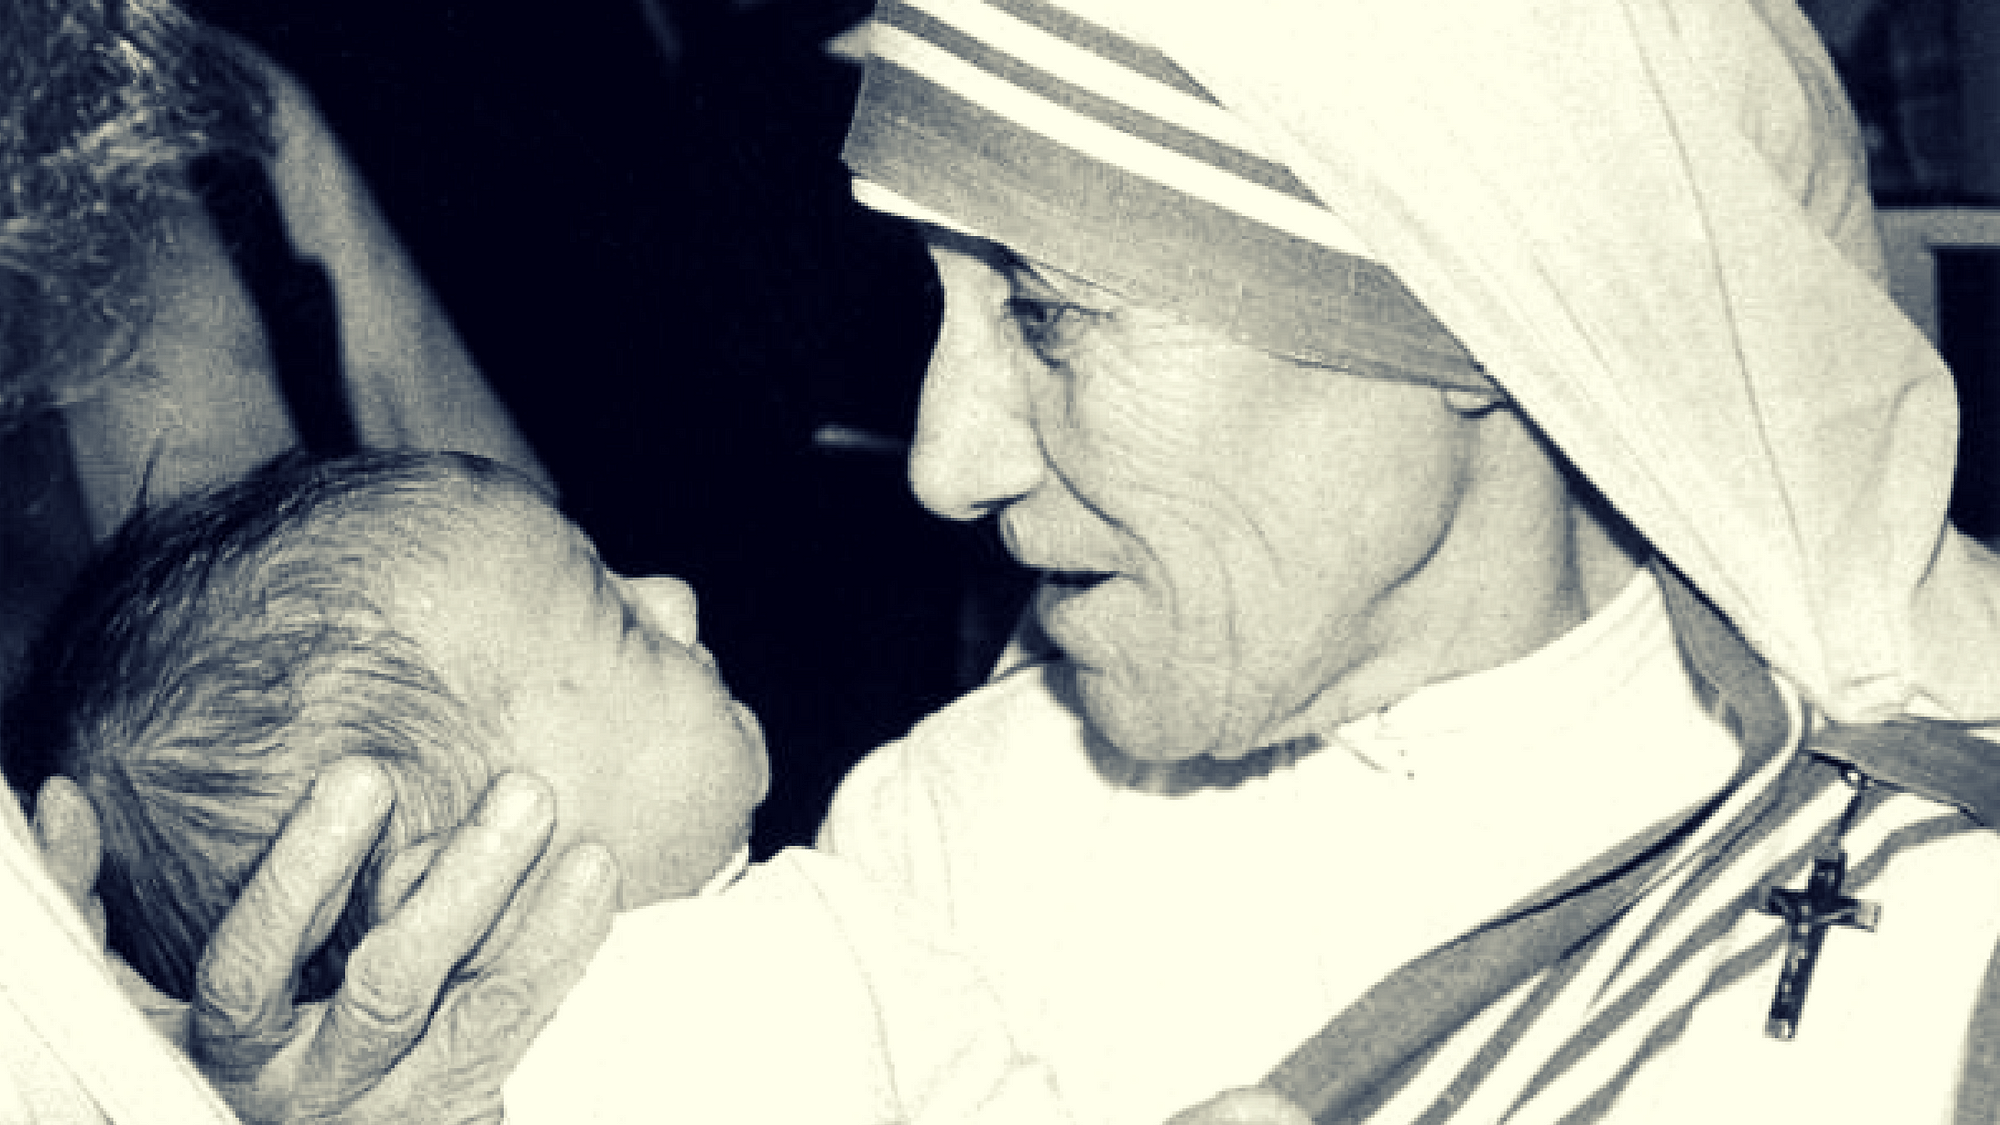 File photo of Mother Teresa. (Photo Courtesy: Facebook/<a href="https://www.facebook.com/MotherTreasea/photos/a.291873140912381.51428.291871450912550/291873147579047/?type=3&amp;theater">Mother Teresa</a>)